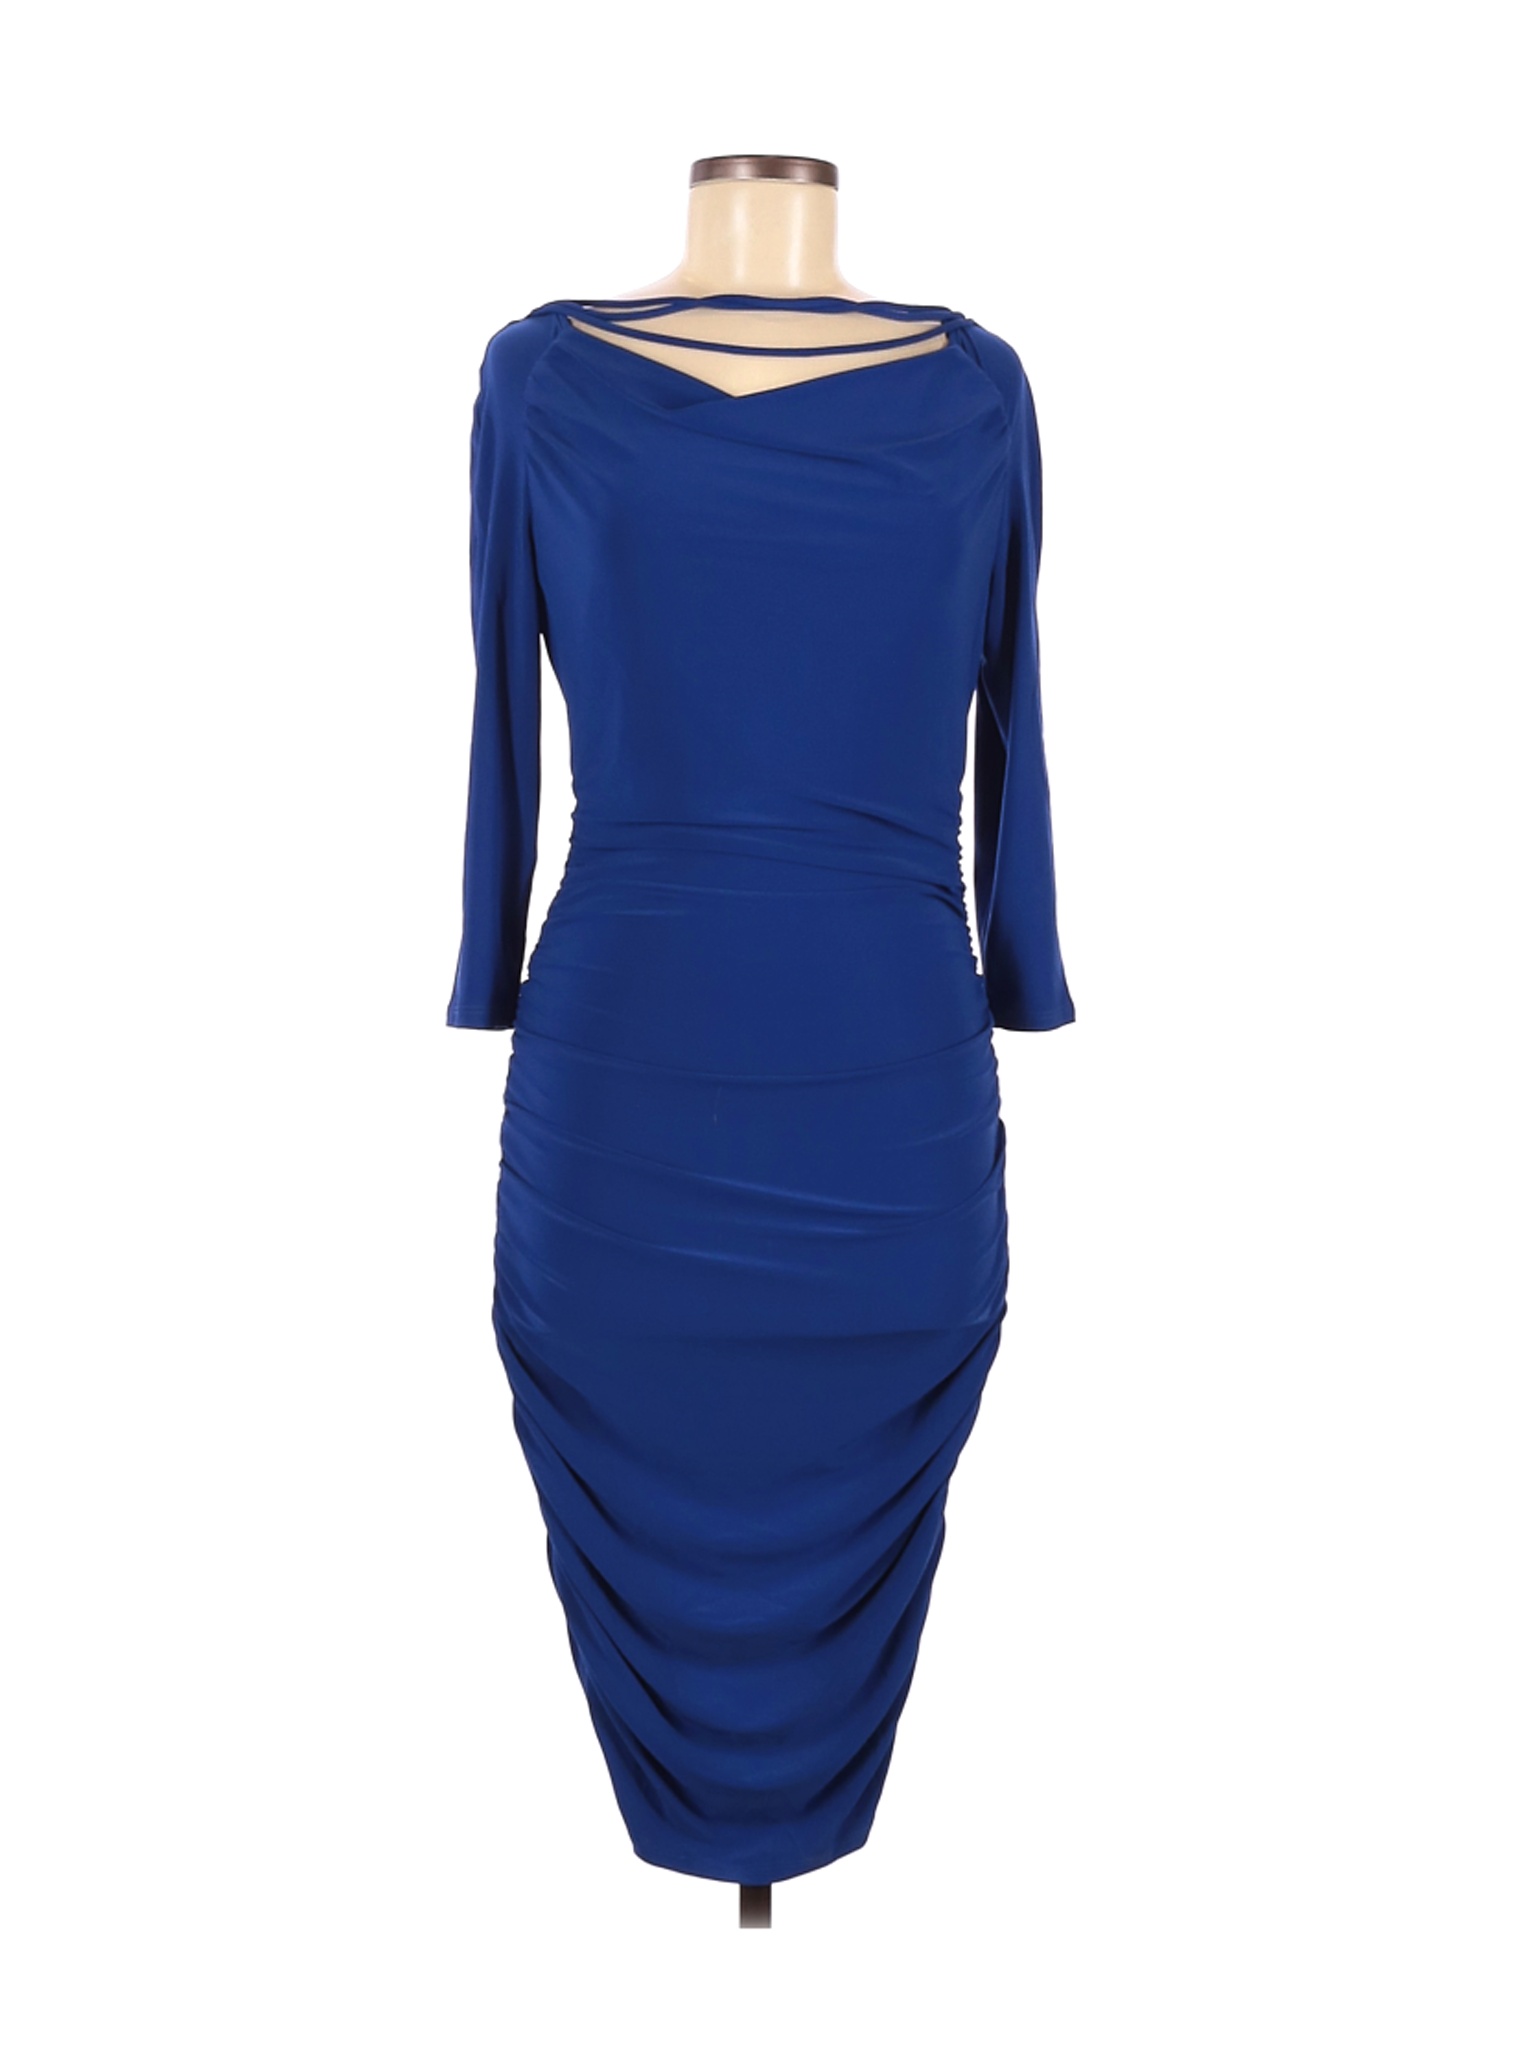 NWT Frank Lyman Design Women Blue Cocktail Dress 8 | eBay